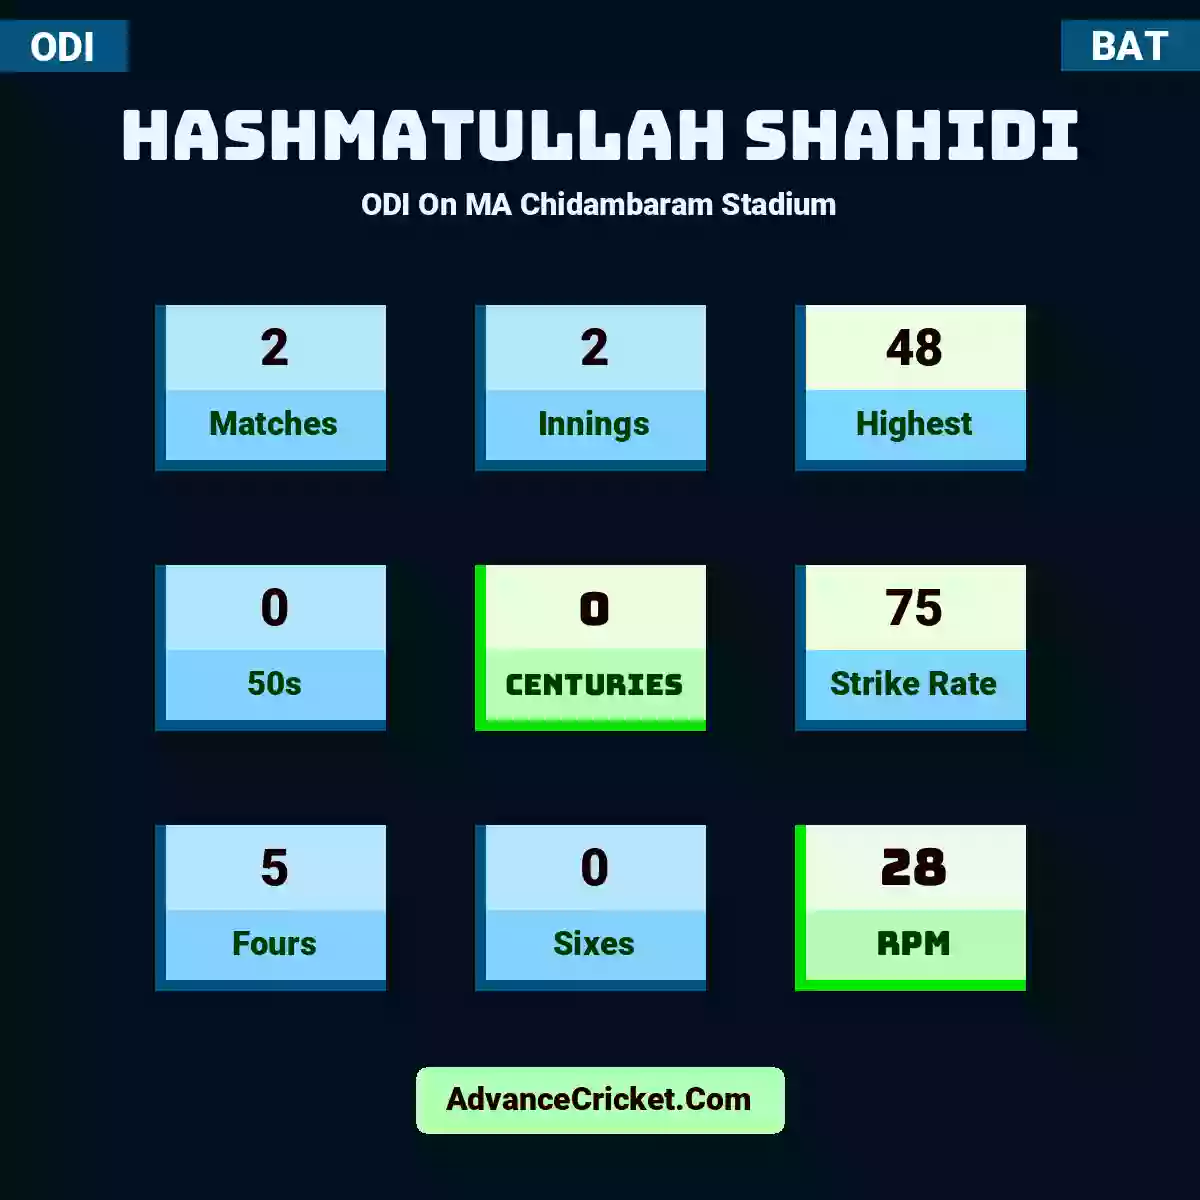 Hashmatullah Shahidi ODI  On MA Chidambaram Stadium, Hashmatullah Shahidi played 2 matches, scored 48 runs as highest, 0 half-centuries, and 0 centuries, with a strike rate of 75. H.Shahidi hit 5 fours and 0 sixes, with an RPM of 28.